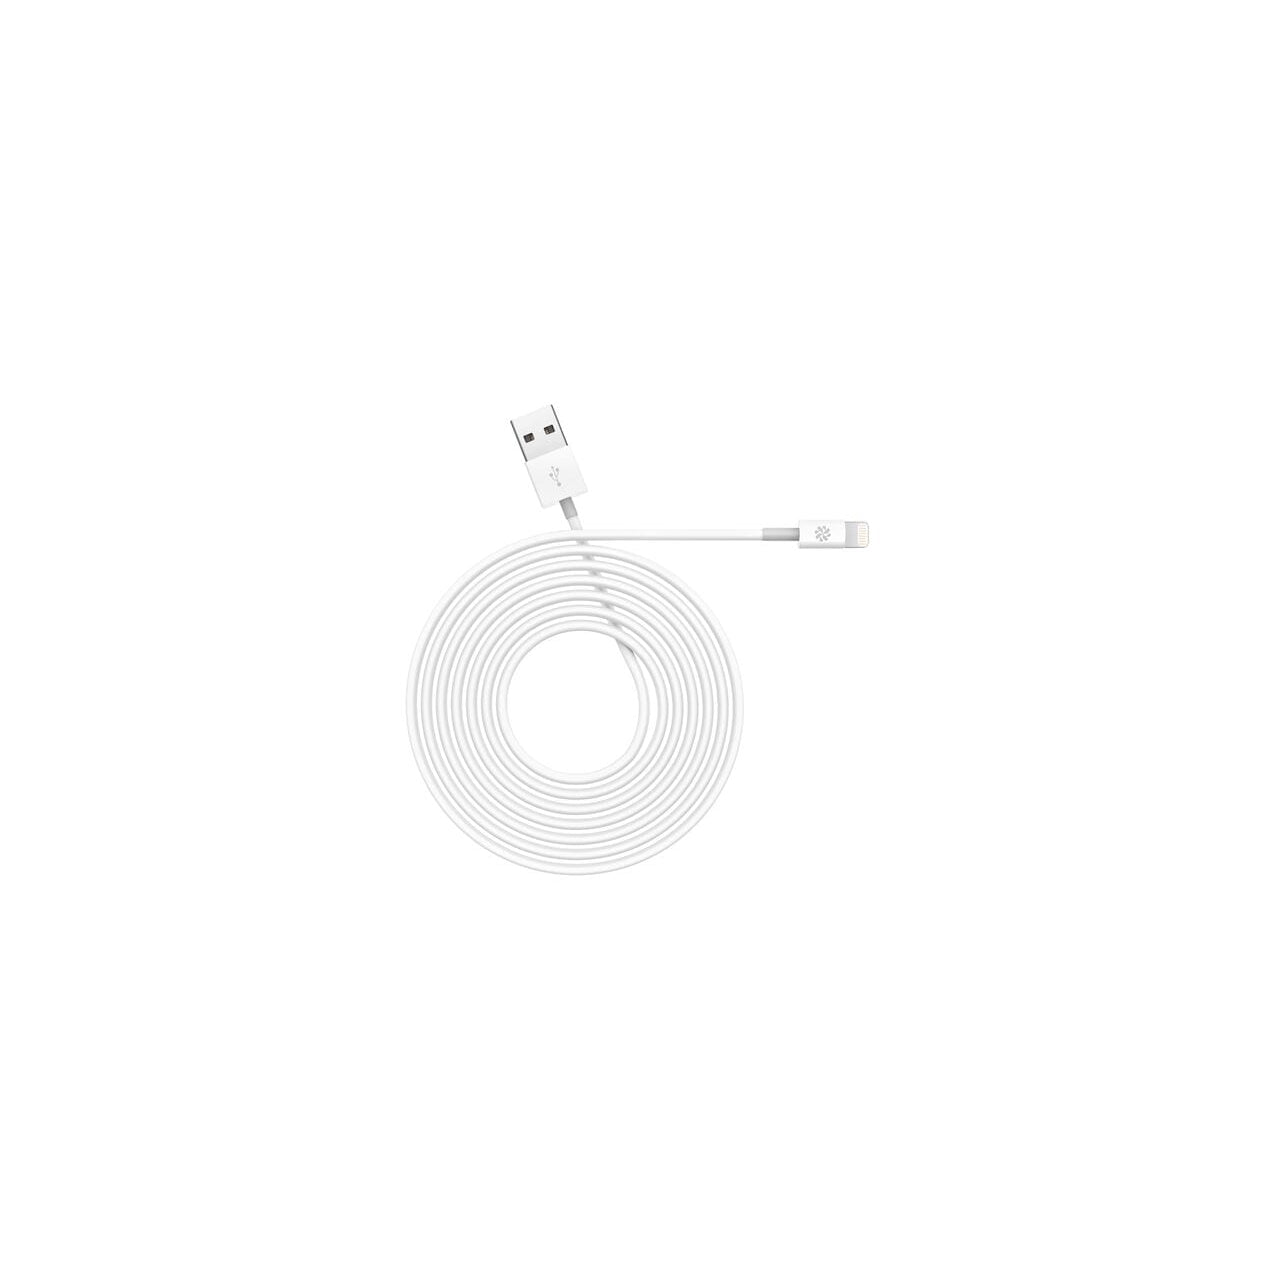 Kanex Lightning 1.2m Thin Cable - White